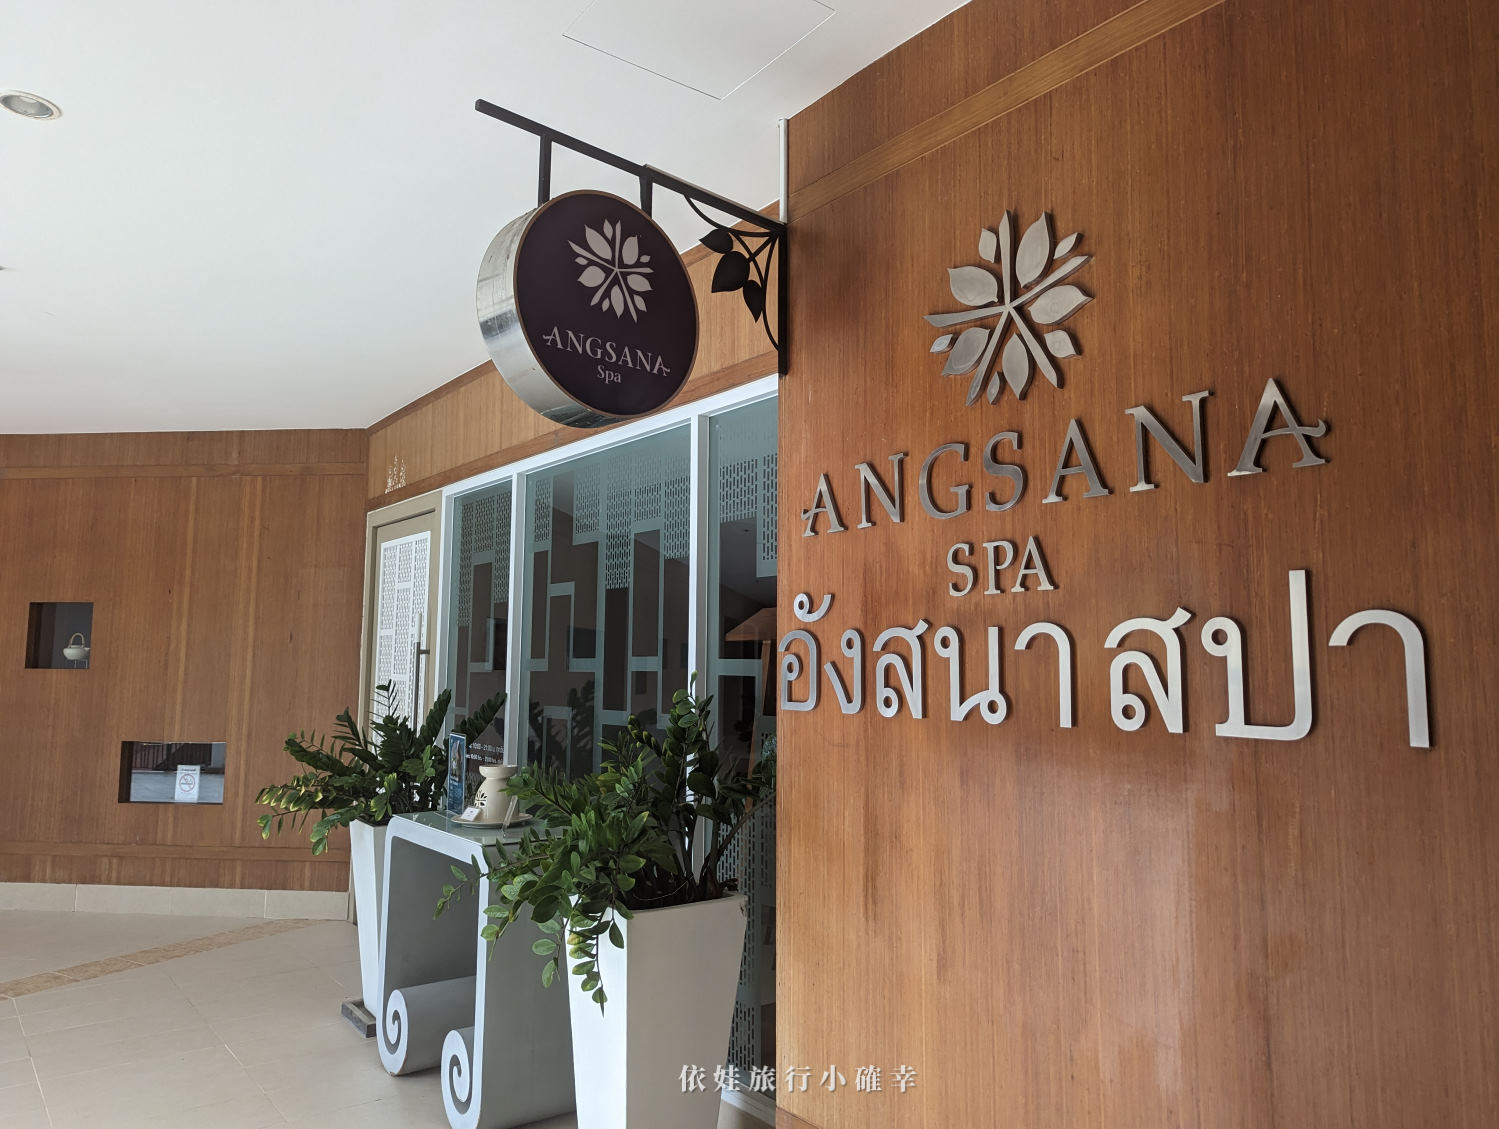 Angsana Laguna Phuket 普吉島樂古浪悅椿度假村評價，推薦一整天不用出門，因為泳池酒吧、私人沙灘、保母遊戲區太讚了